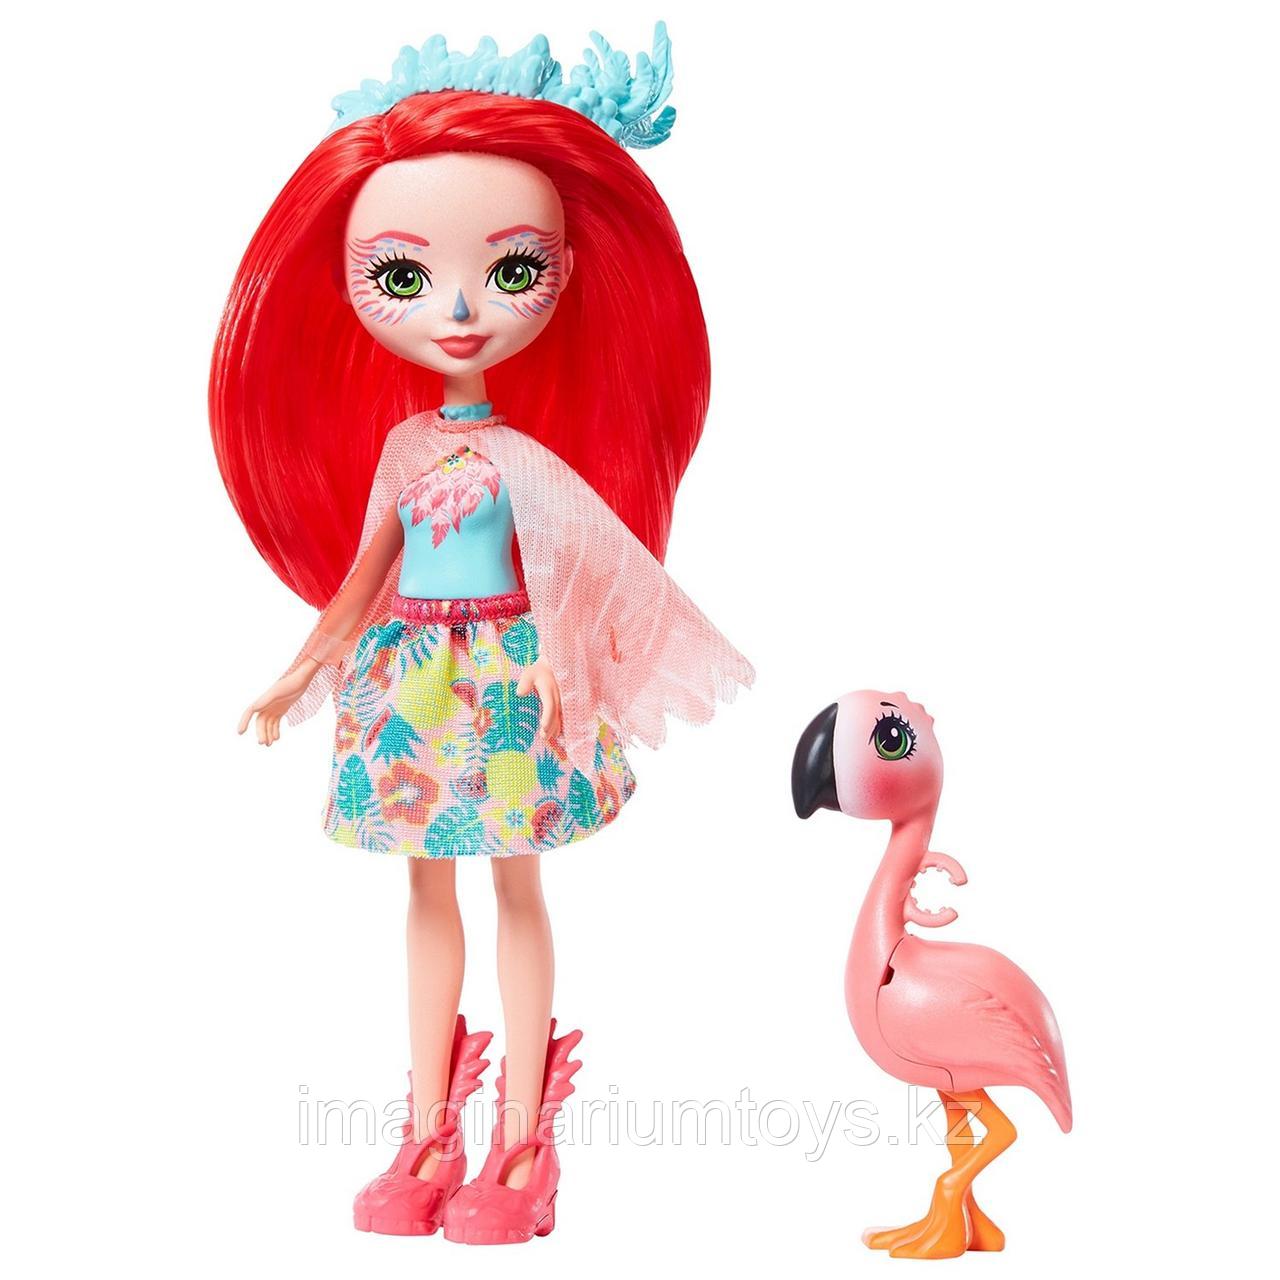 Кукла Энчантималс фламинго Фэнси и Свош, фото 1